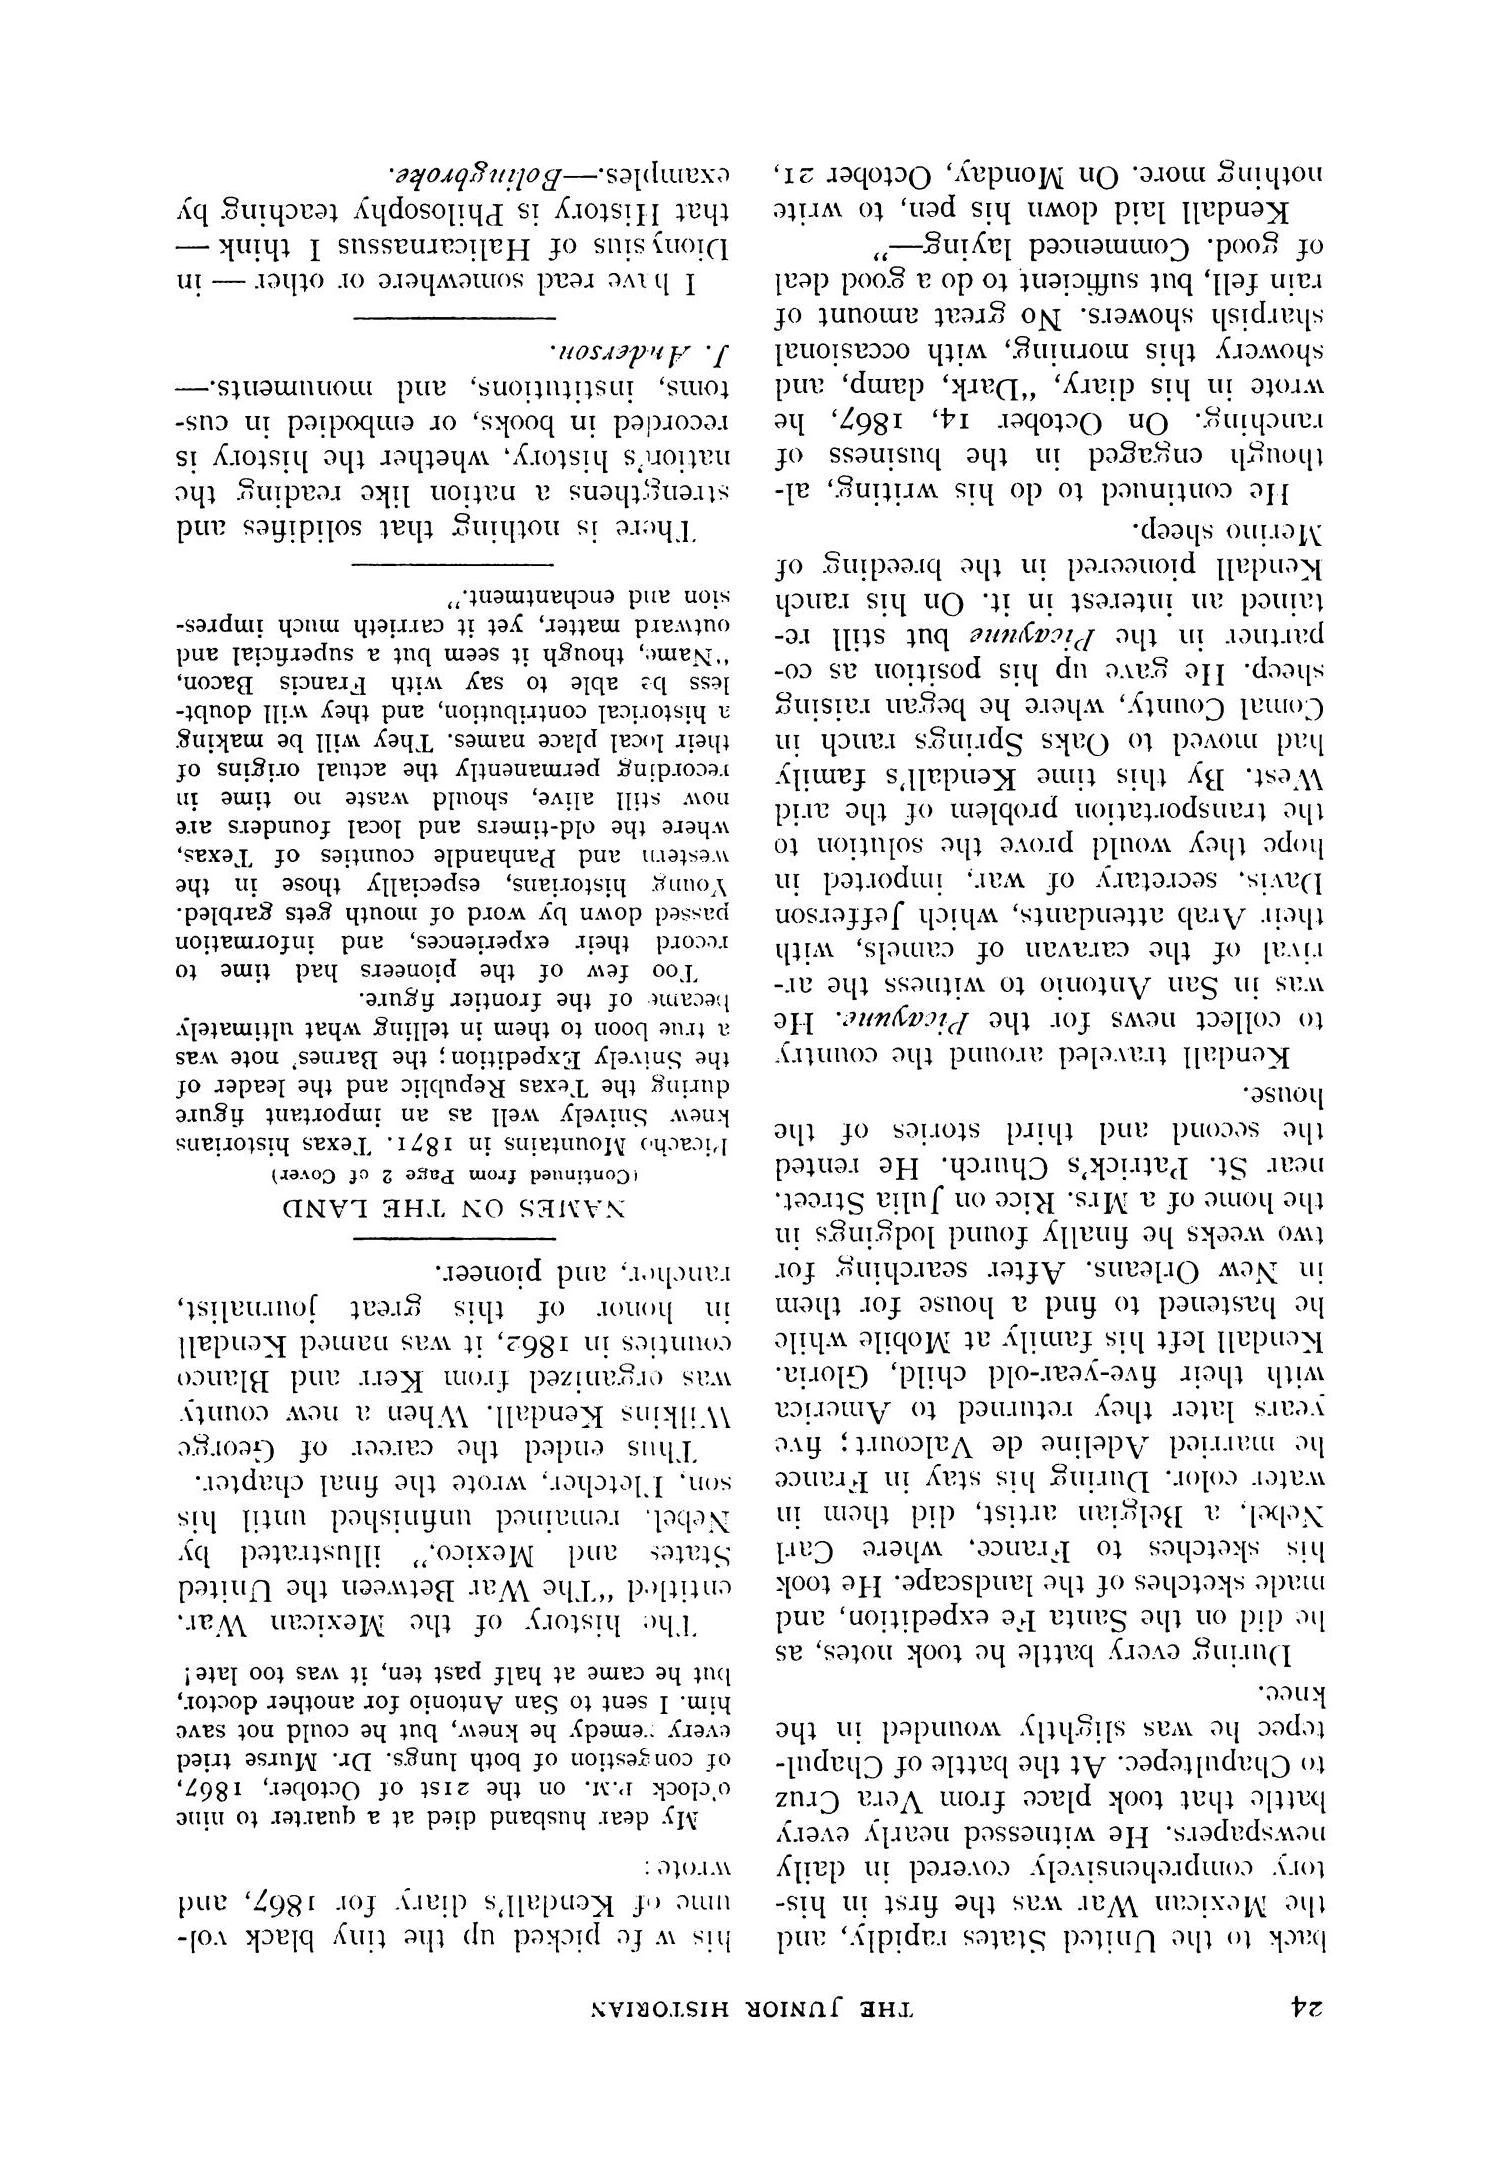 The Junior Historian, Volume 8, Number 4, January 1948
                                                
                                                    24
                                                